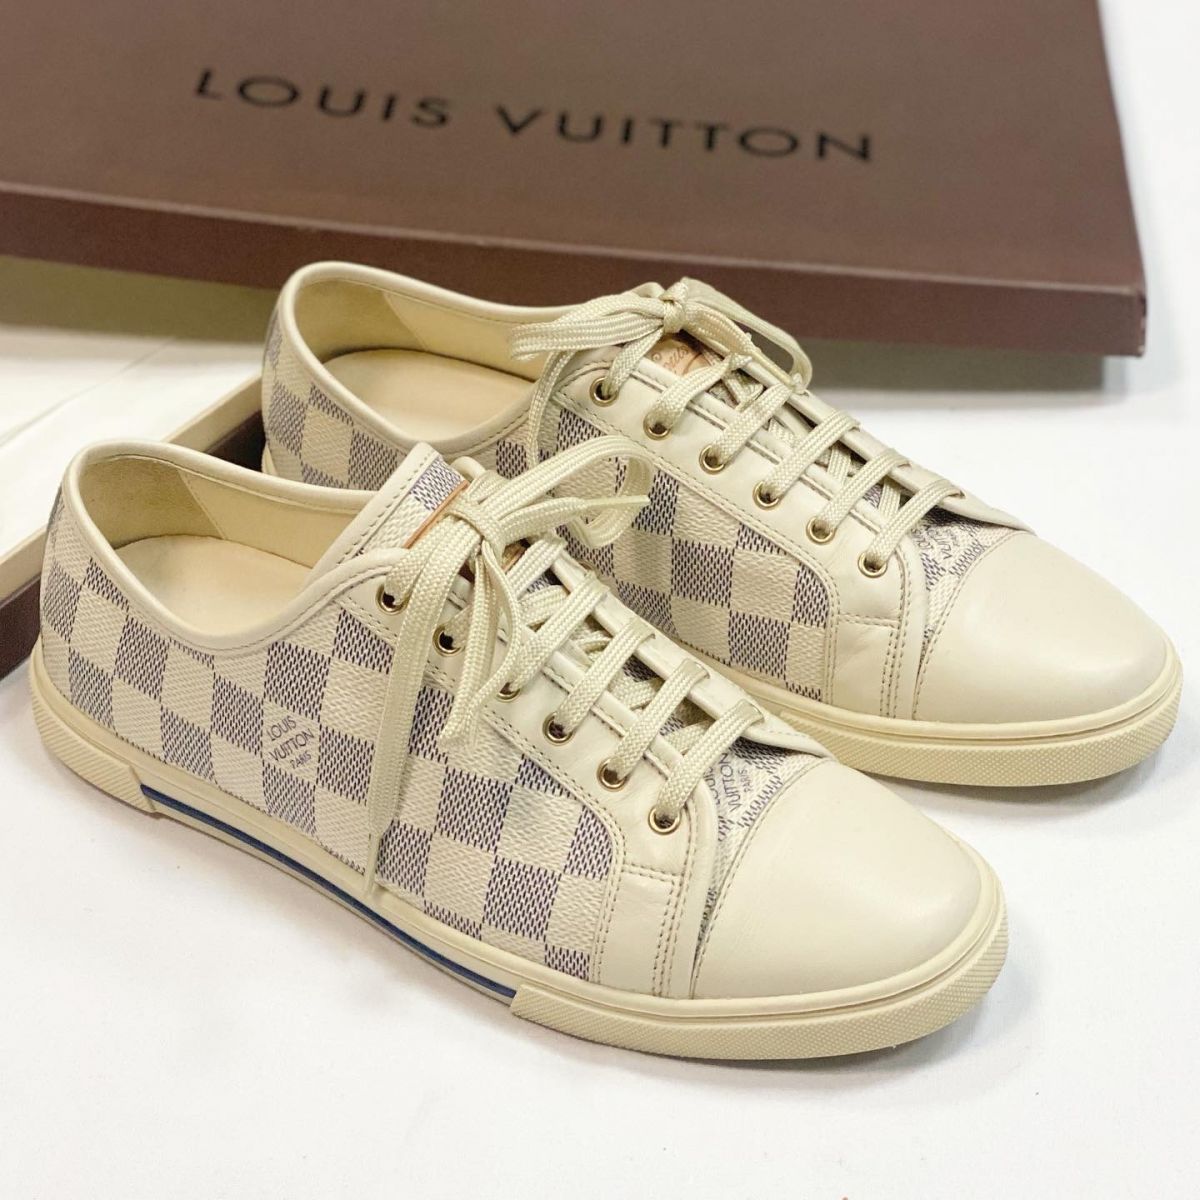 Кеды Louis Vuitton размер 37.5 цена 26 155 руб 